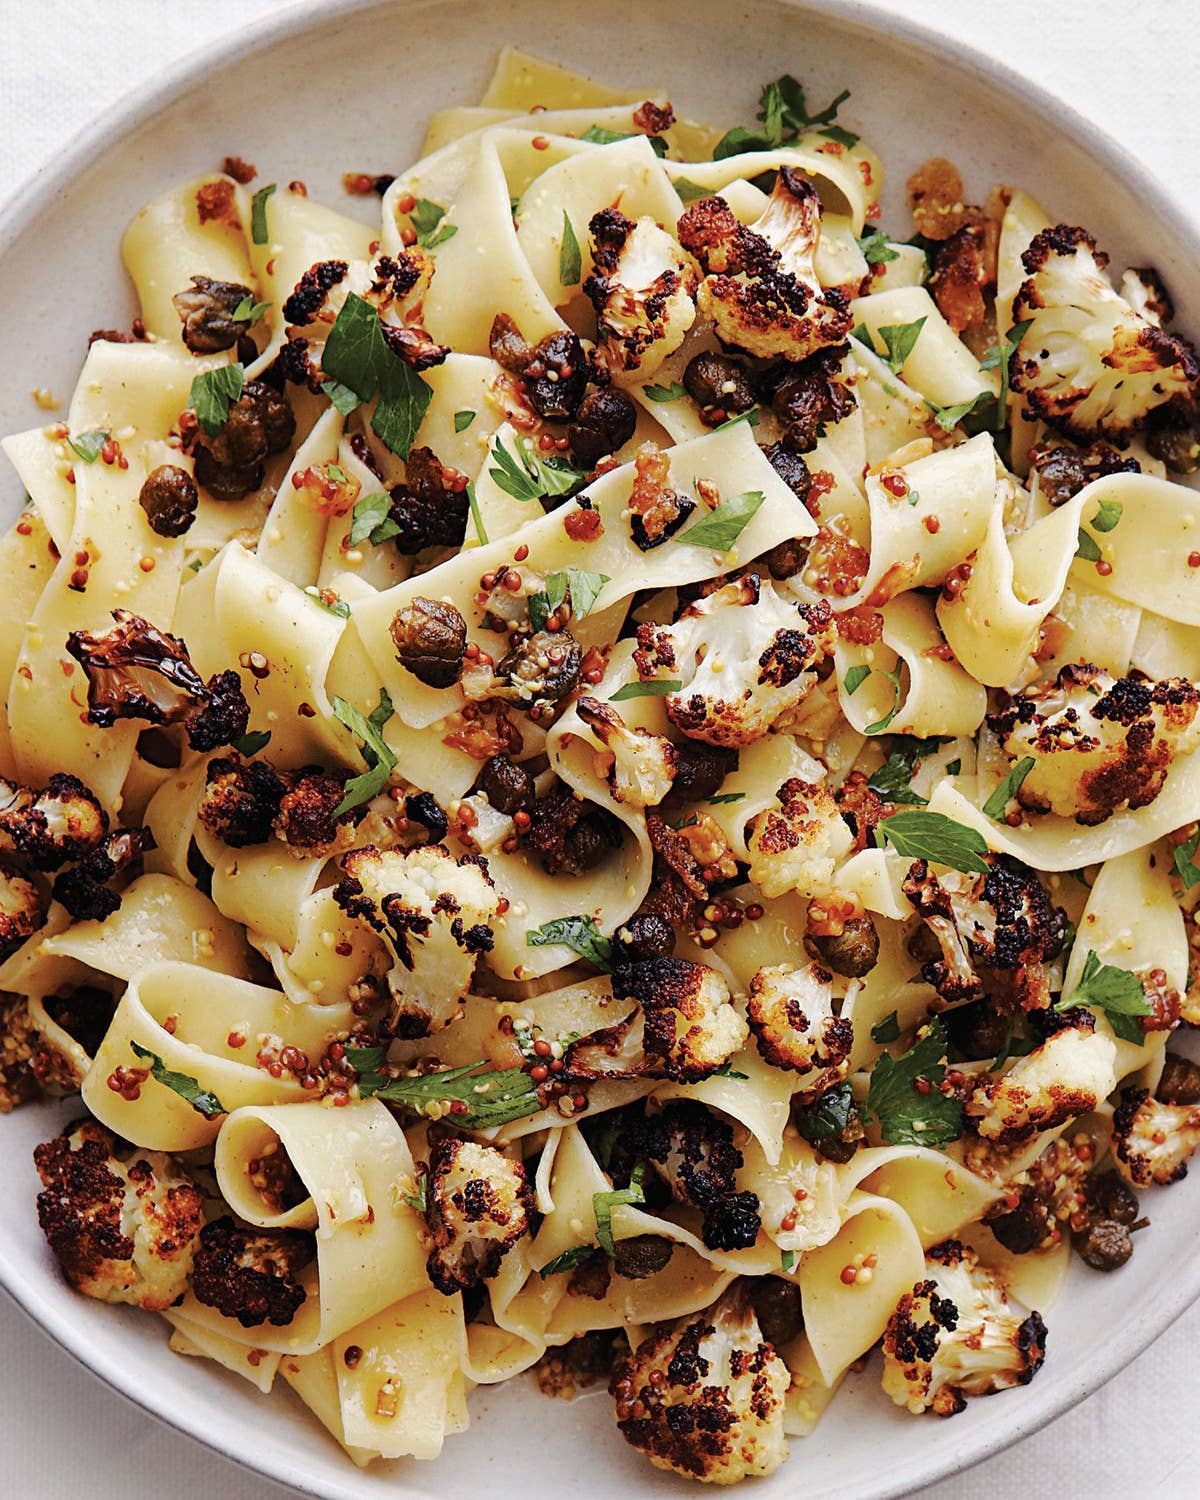 Add Charred Cauliflower to Your Winter Pasta Arsenal